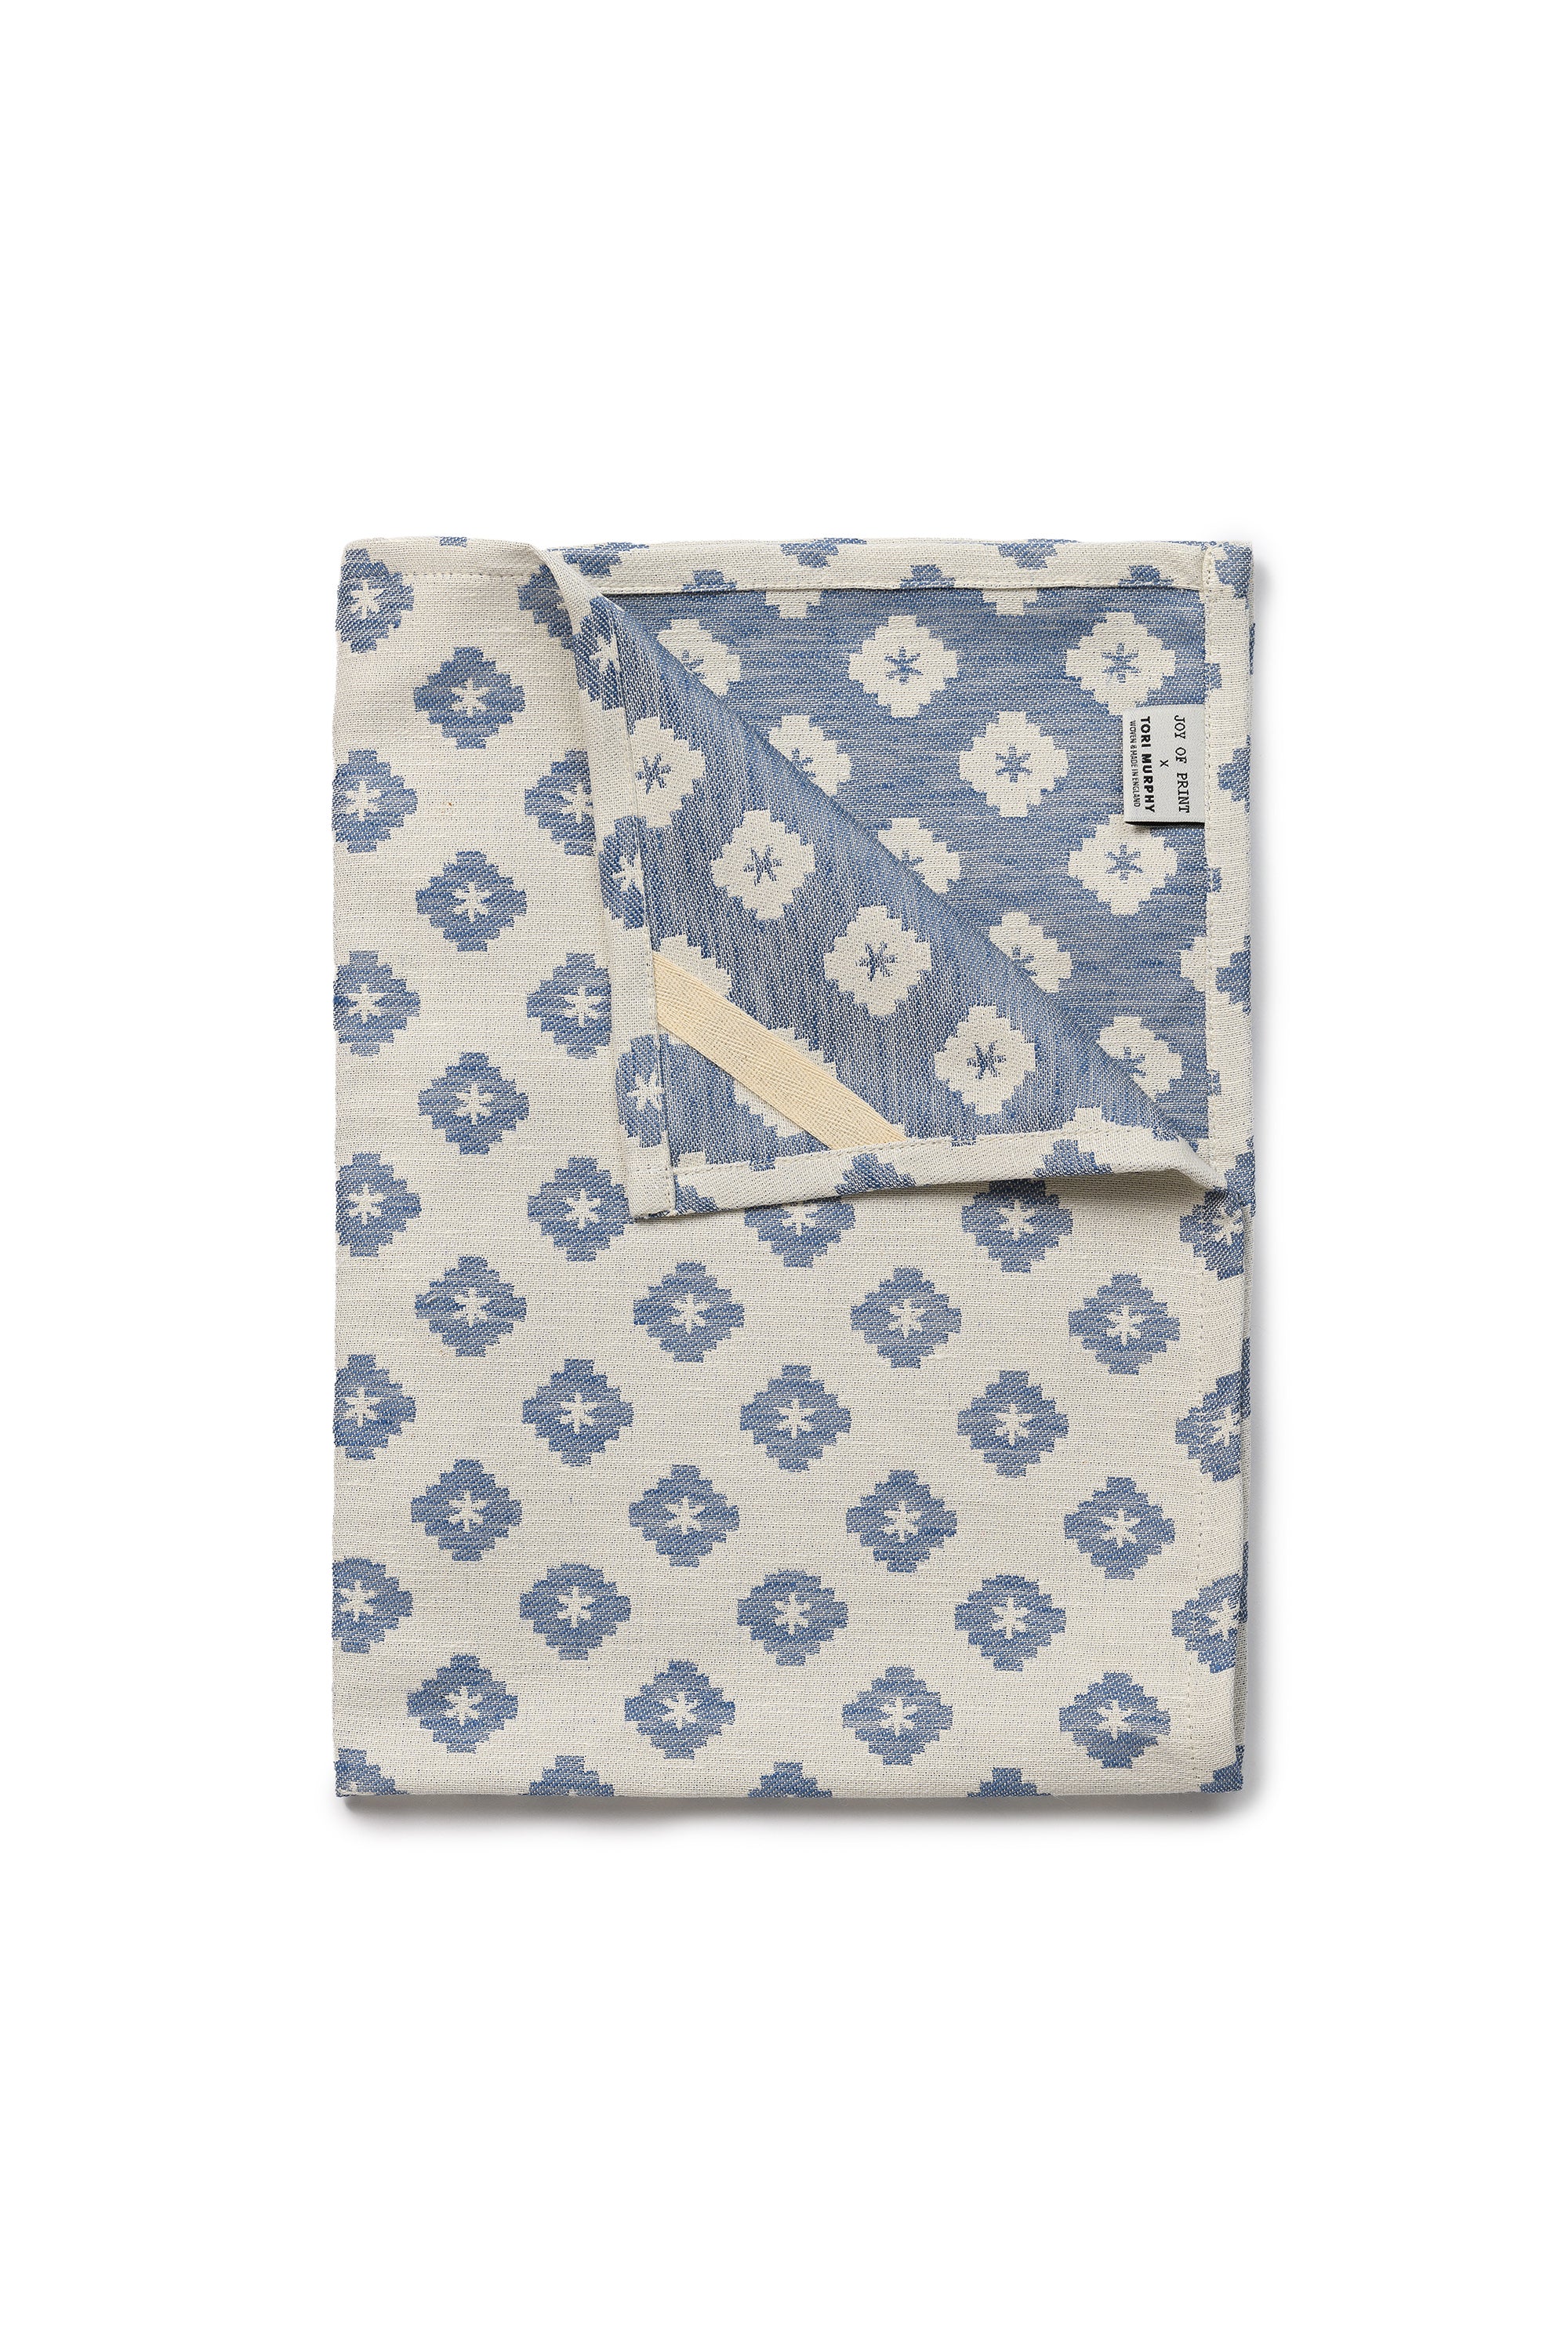 Joy of Print X Tori Murphy Diamond Star Tea Towel Indigo